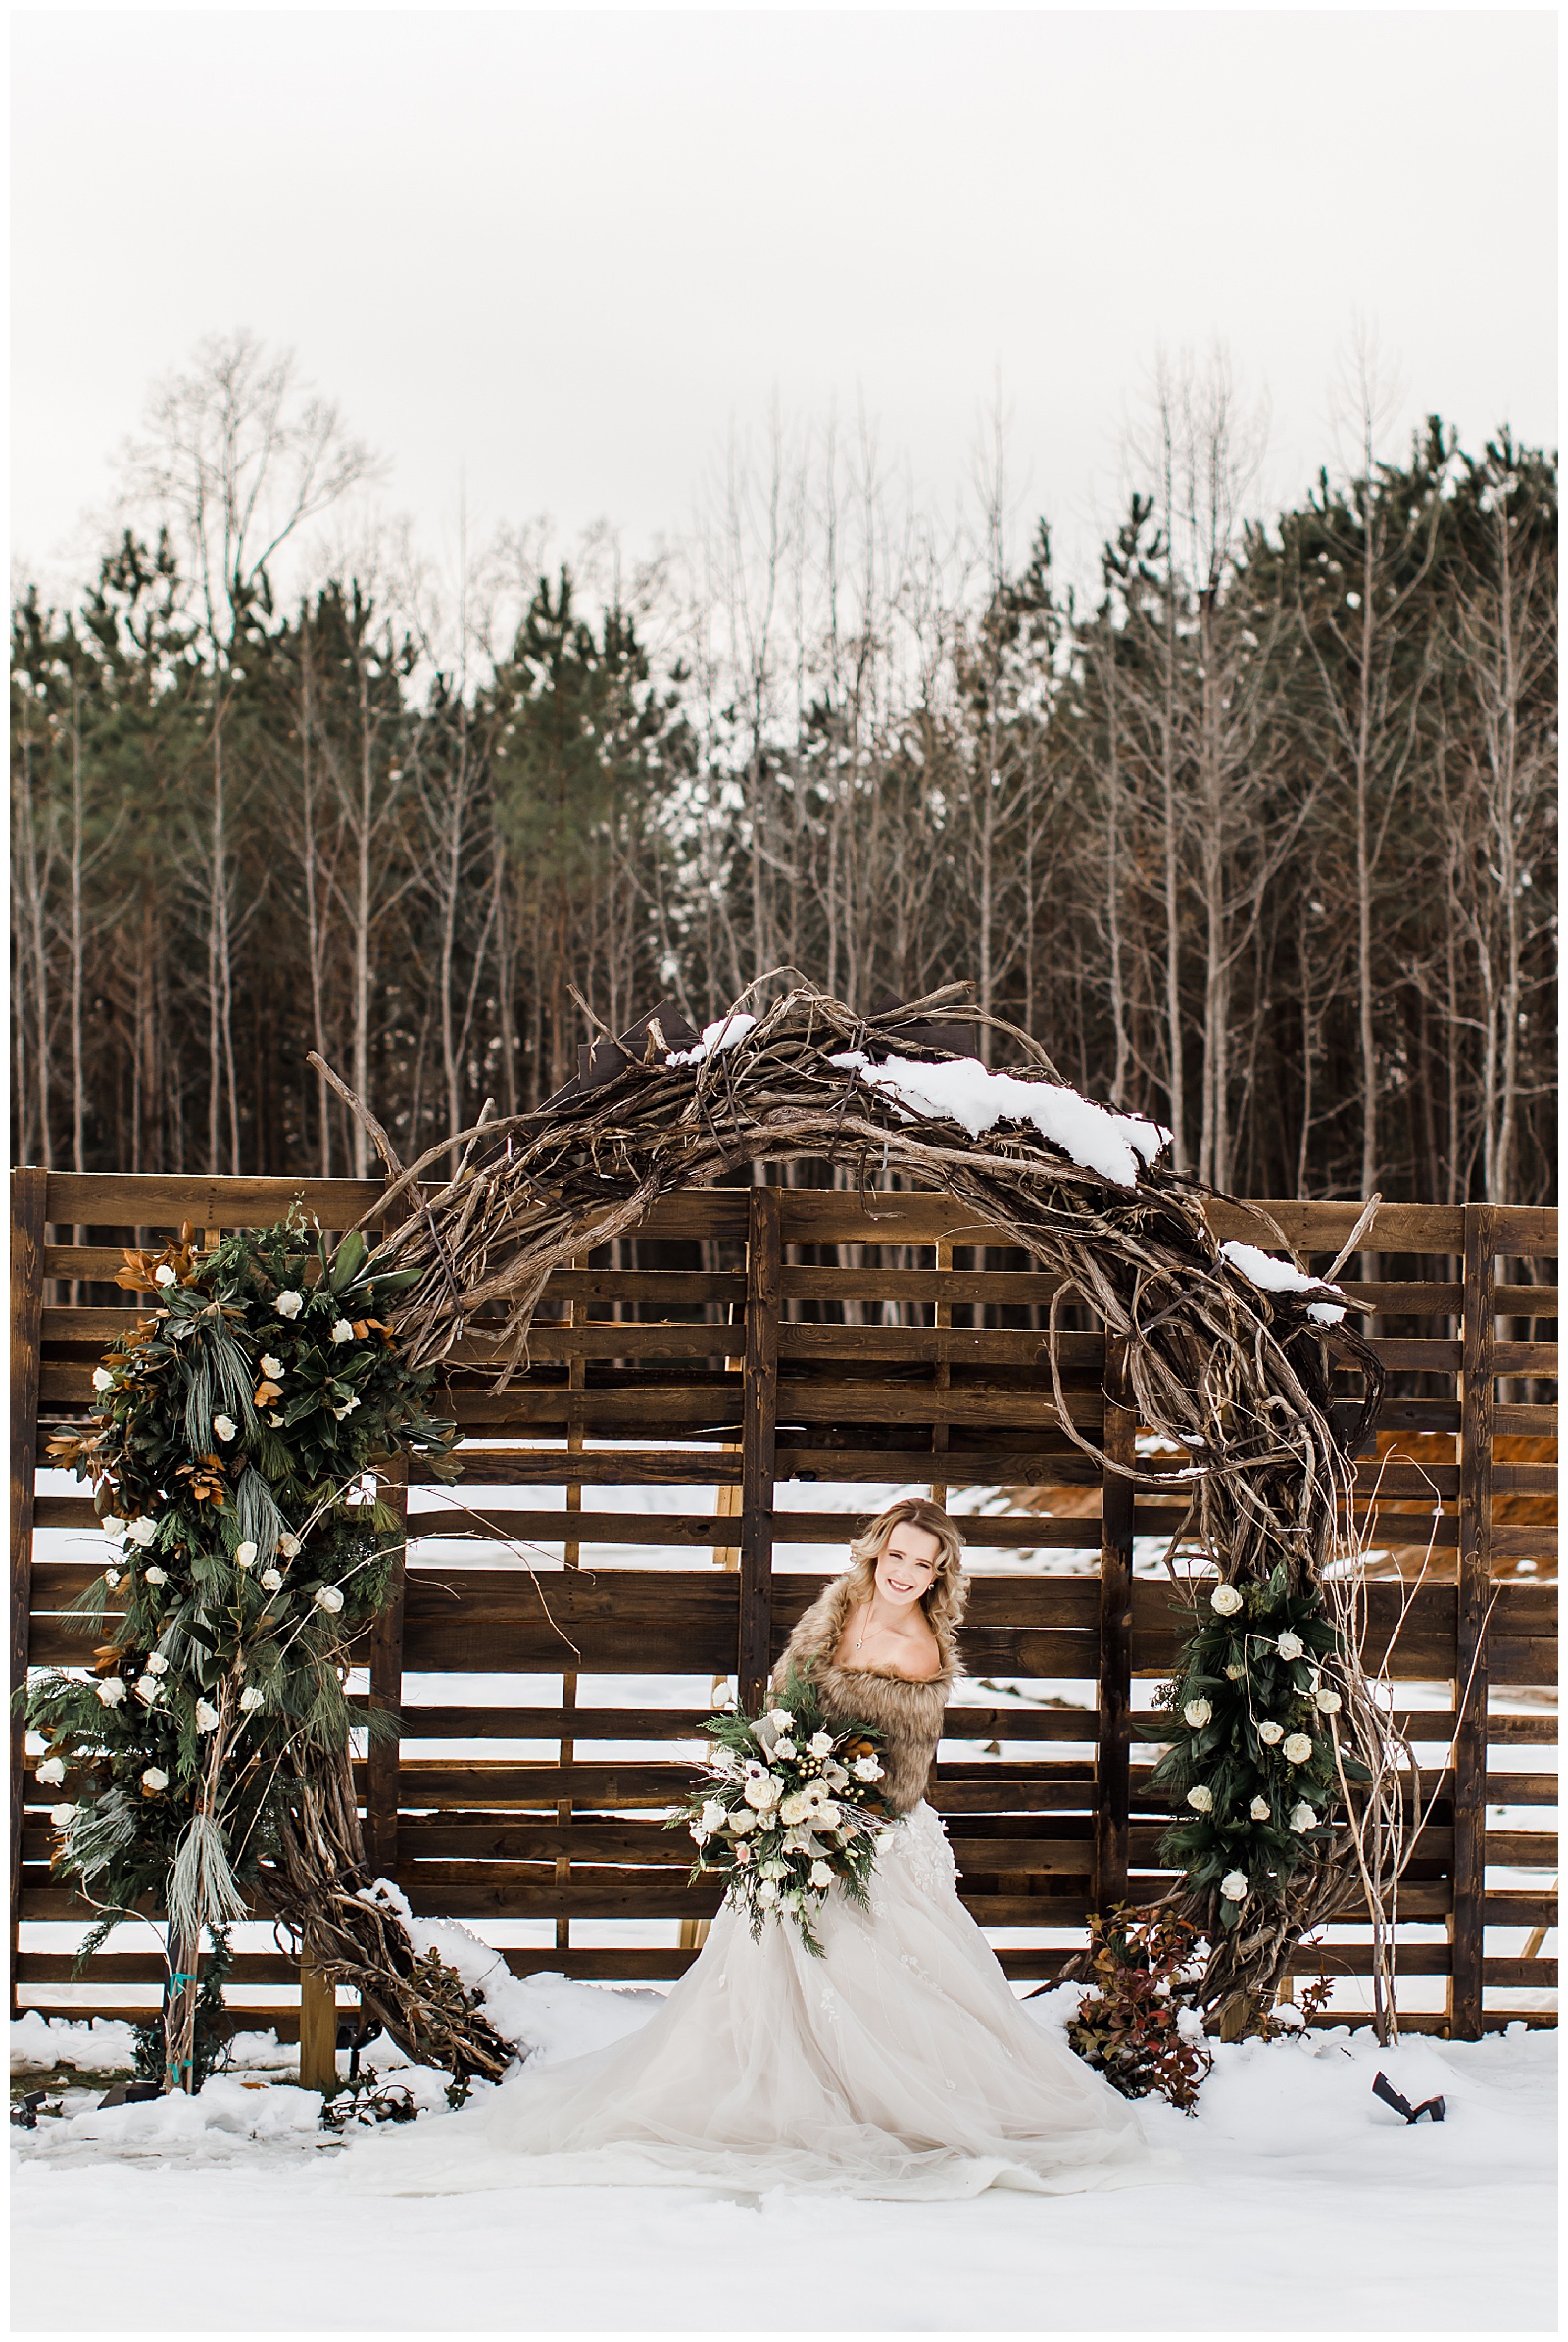 antebellum-of-new-kent-winter-wedding-inspiration-ch-sh-fredericks-photography_0031.jpg